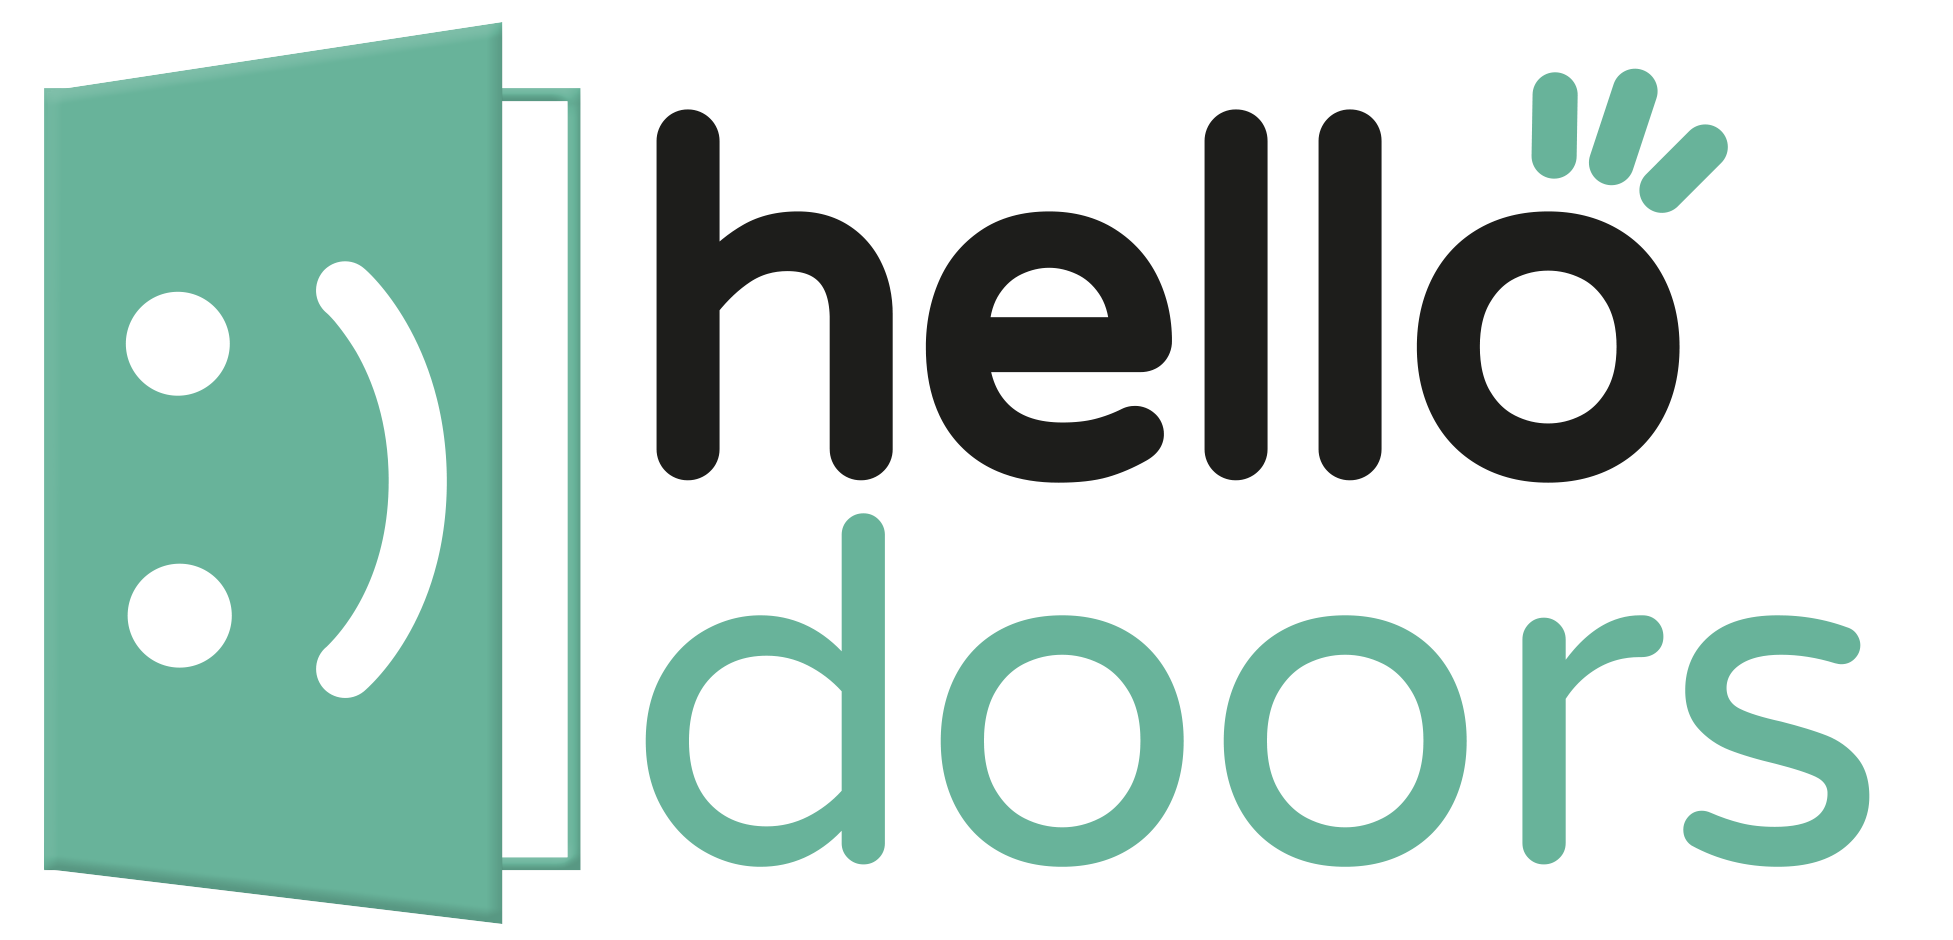 Company Hello Doors. Description and contact information.